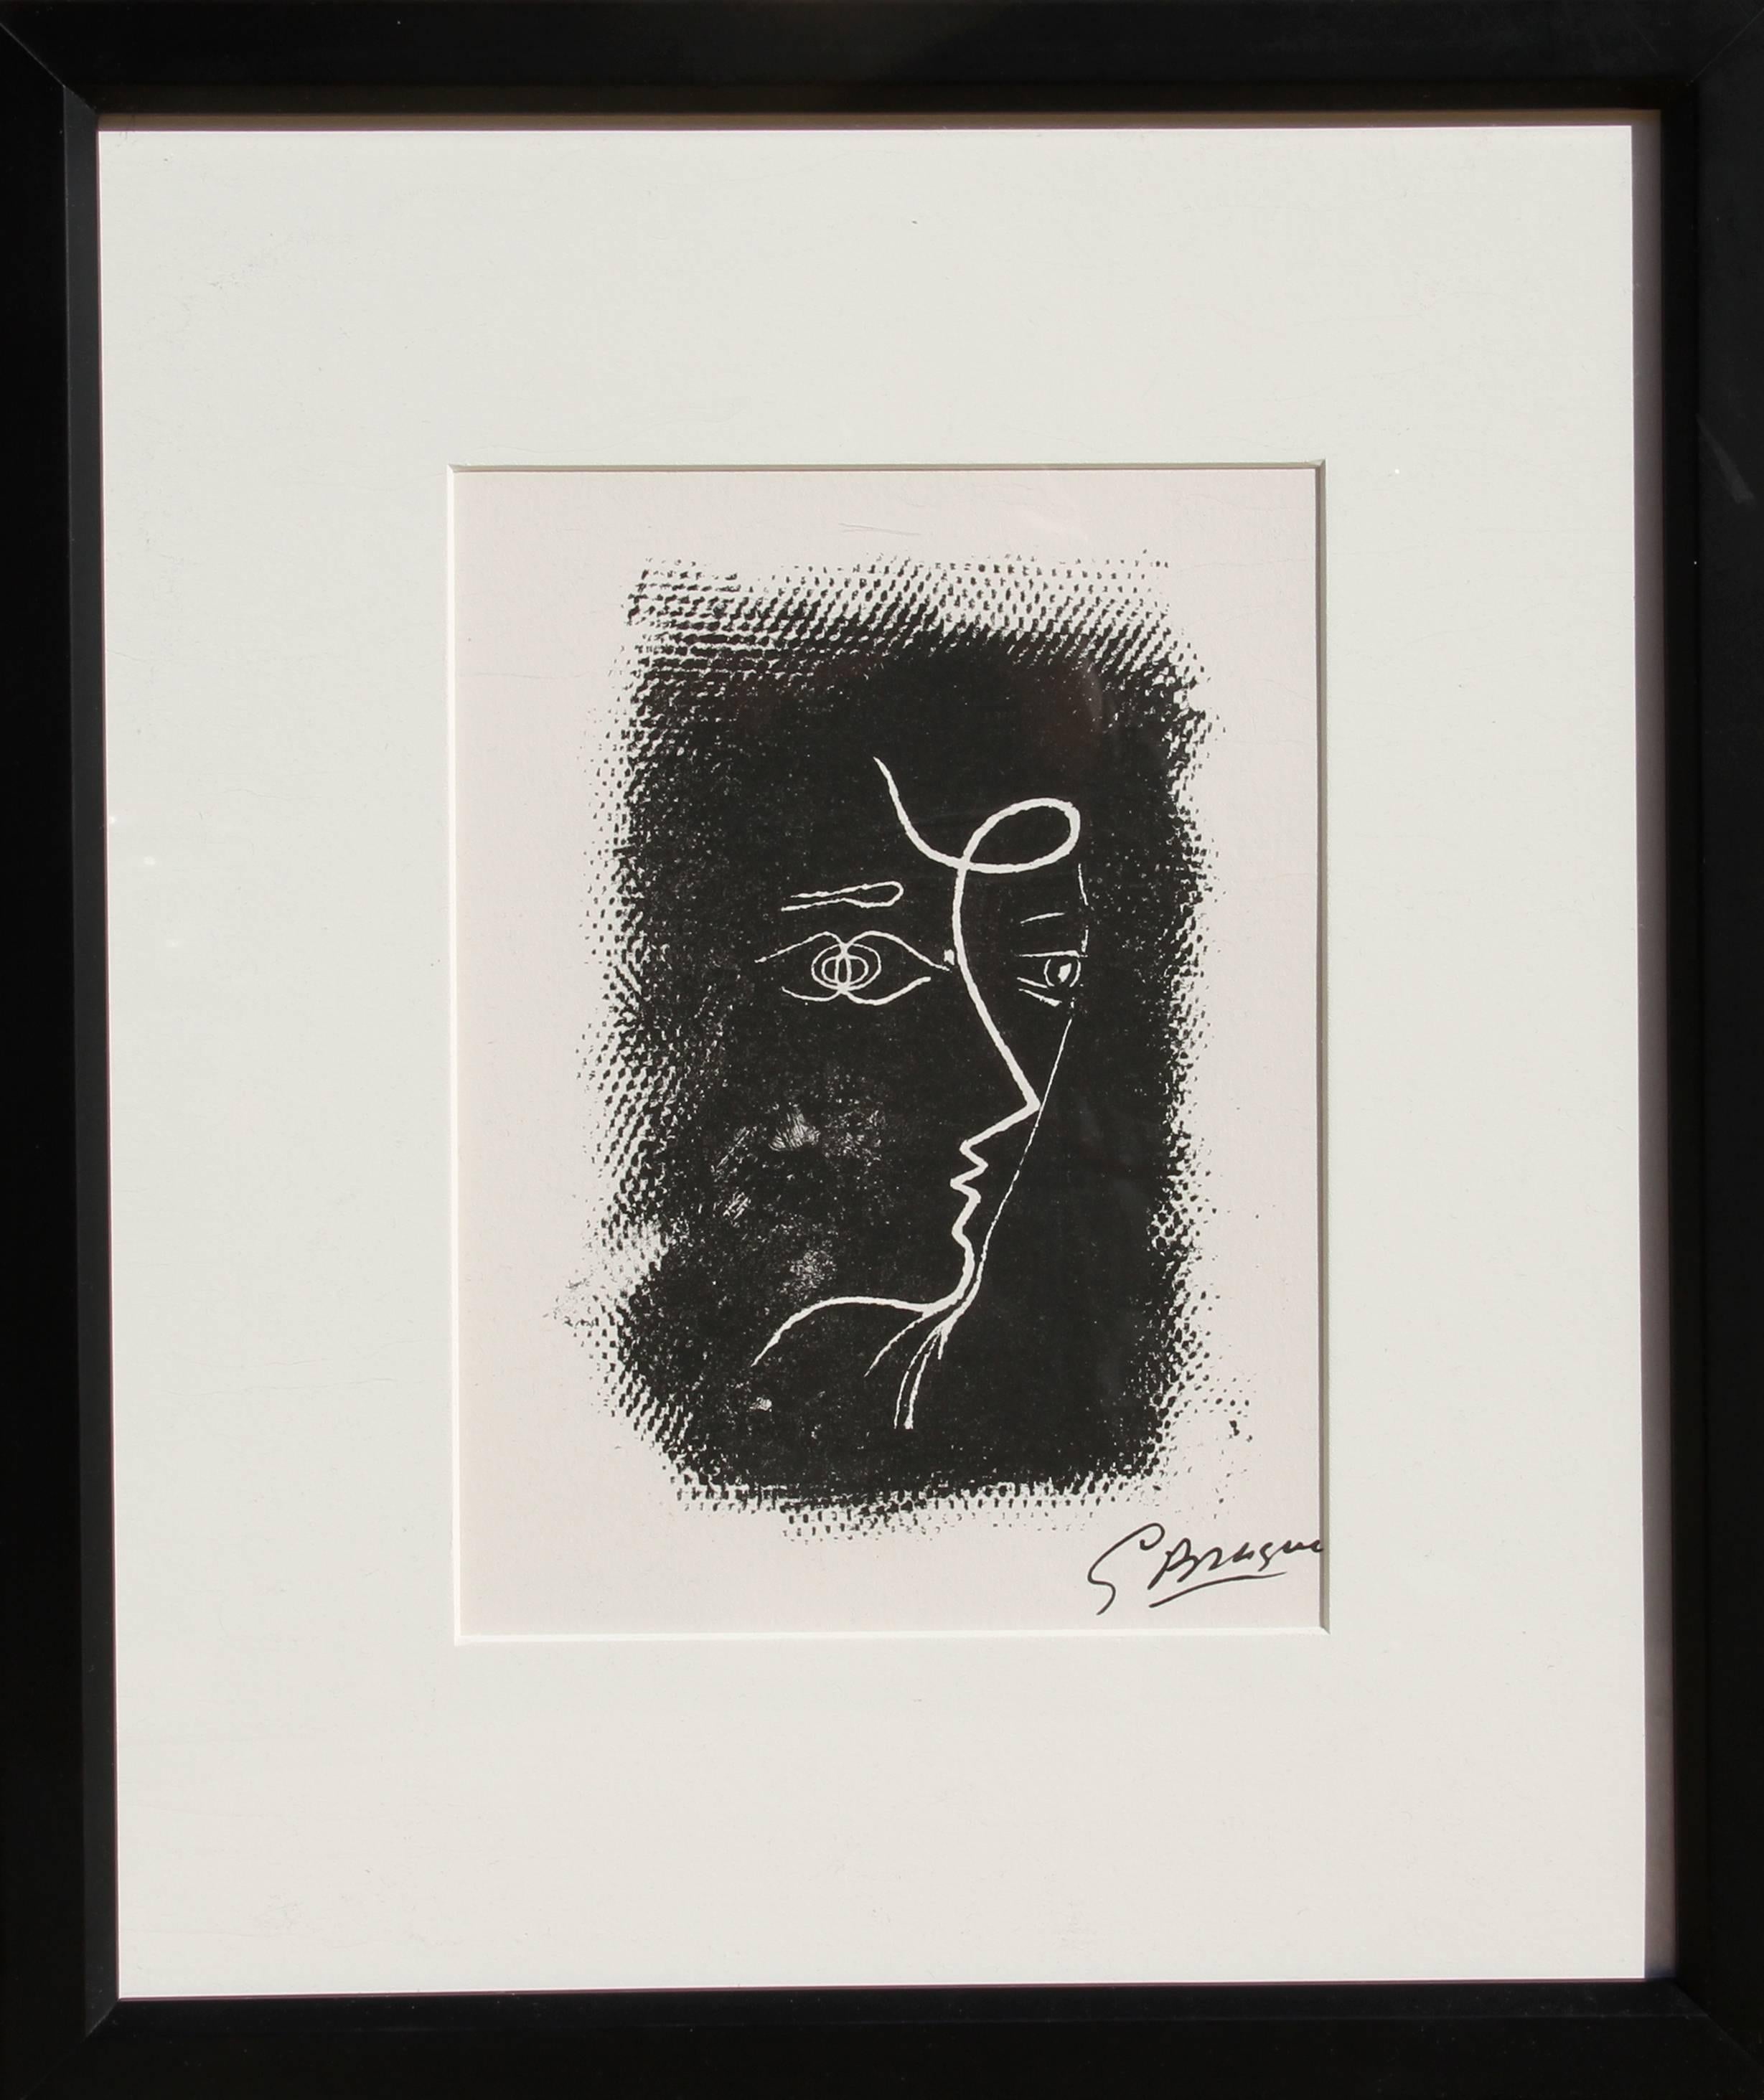 Artist: Georges Braque (after), French (1882 - 1963)
Title: Profil de Femme from Souvenirs de Portraits d'Artistes. Jacques Prévert: Le Coeur à l'ouvrage (M.25)
Year: 1972
Medium: Lithograph, signed in the plate
Edition: 800
Image Size: 8 x 5.5